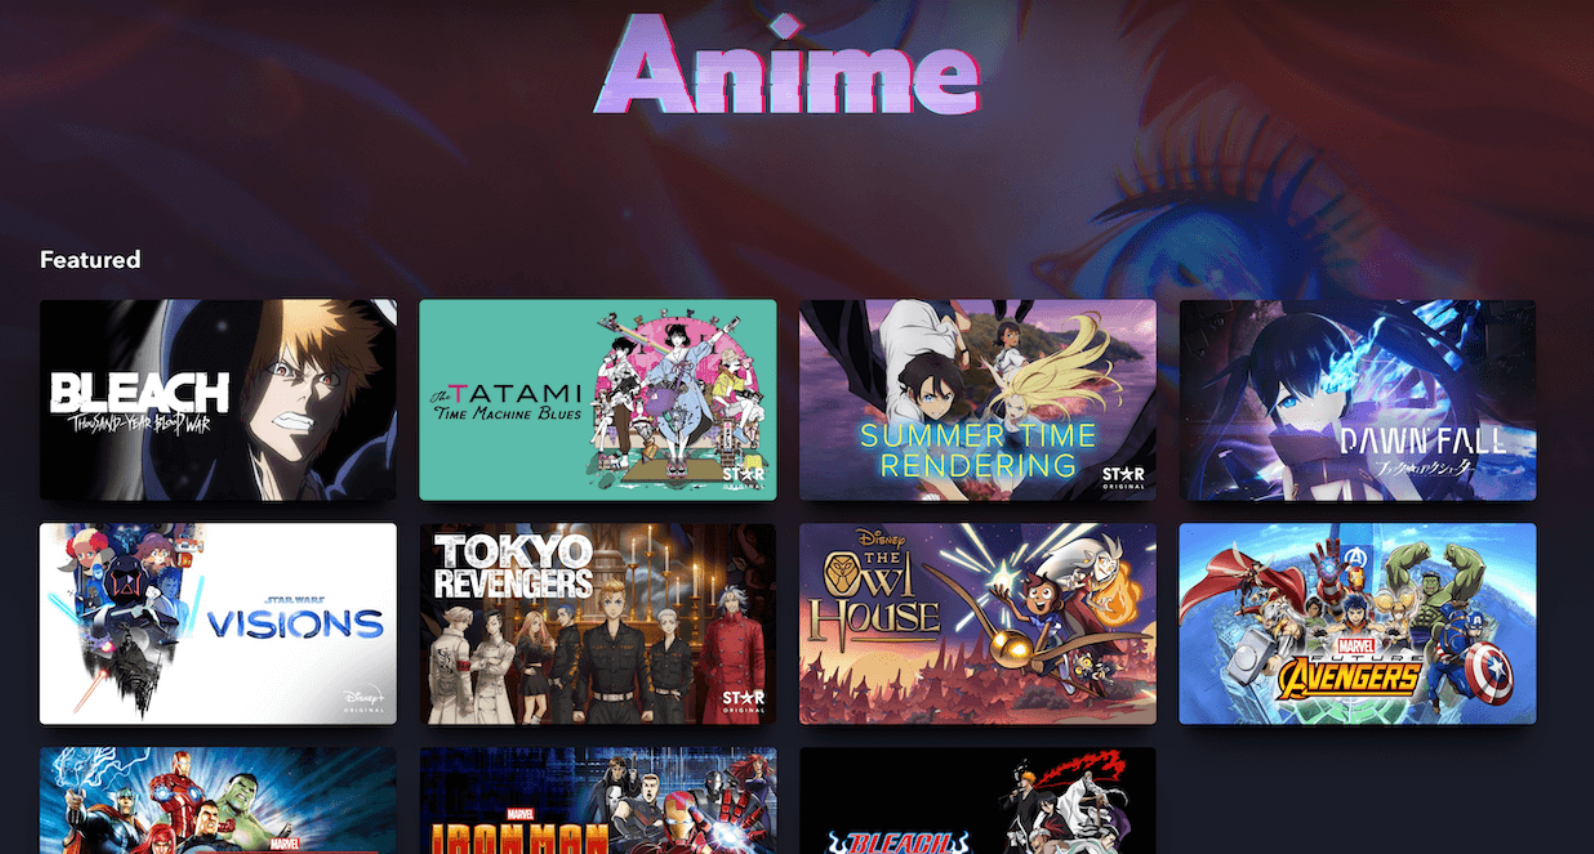 Anime Disney Princesses  Fan Art  Media Chomp